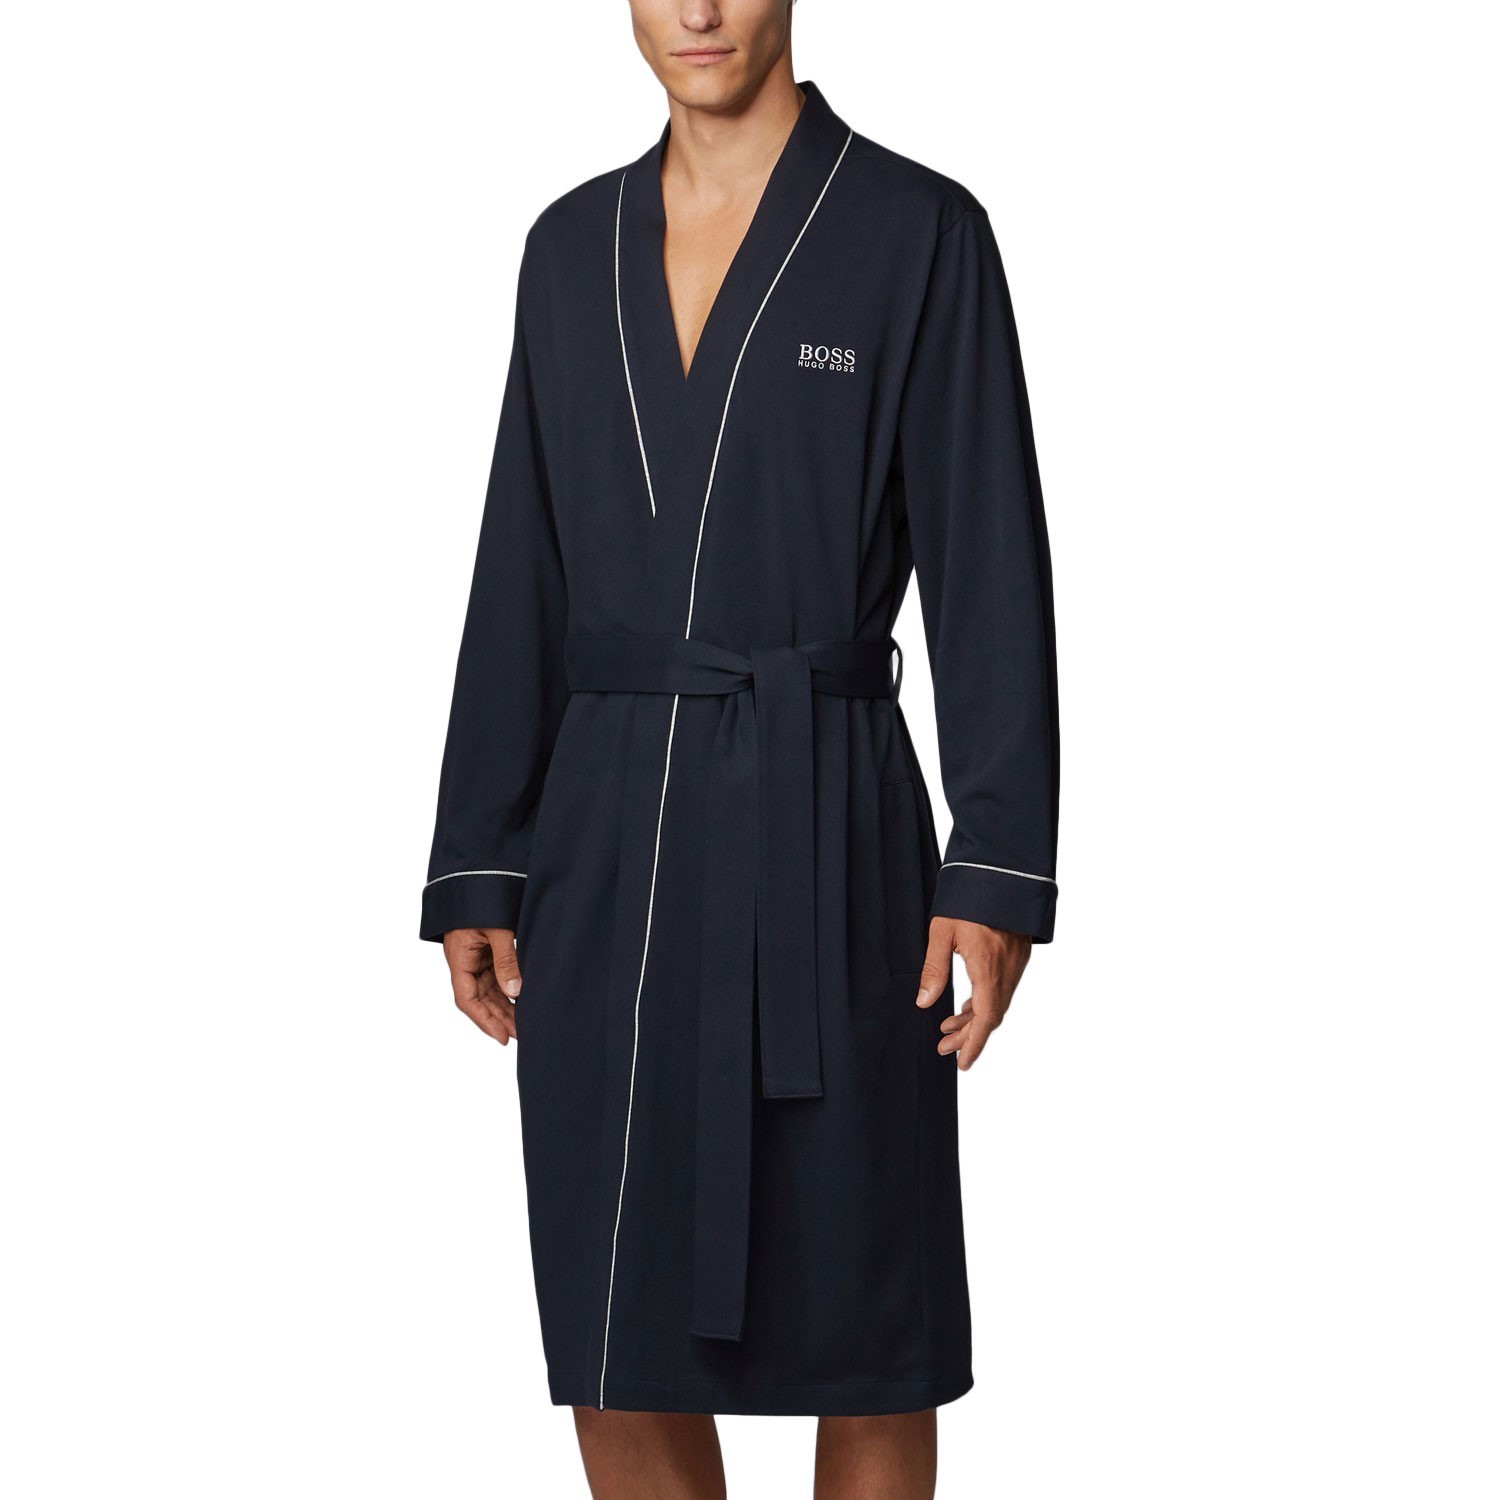 Hugo Boss Kimono - Robes - Loungewear - Underwear - Timarco.eu